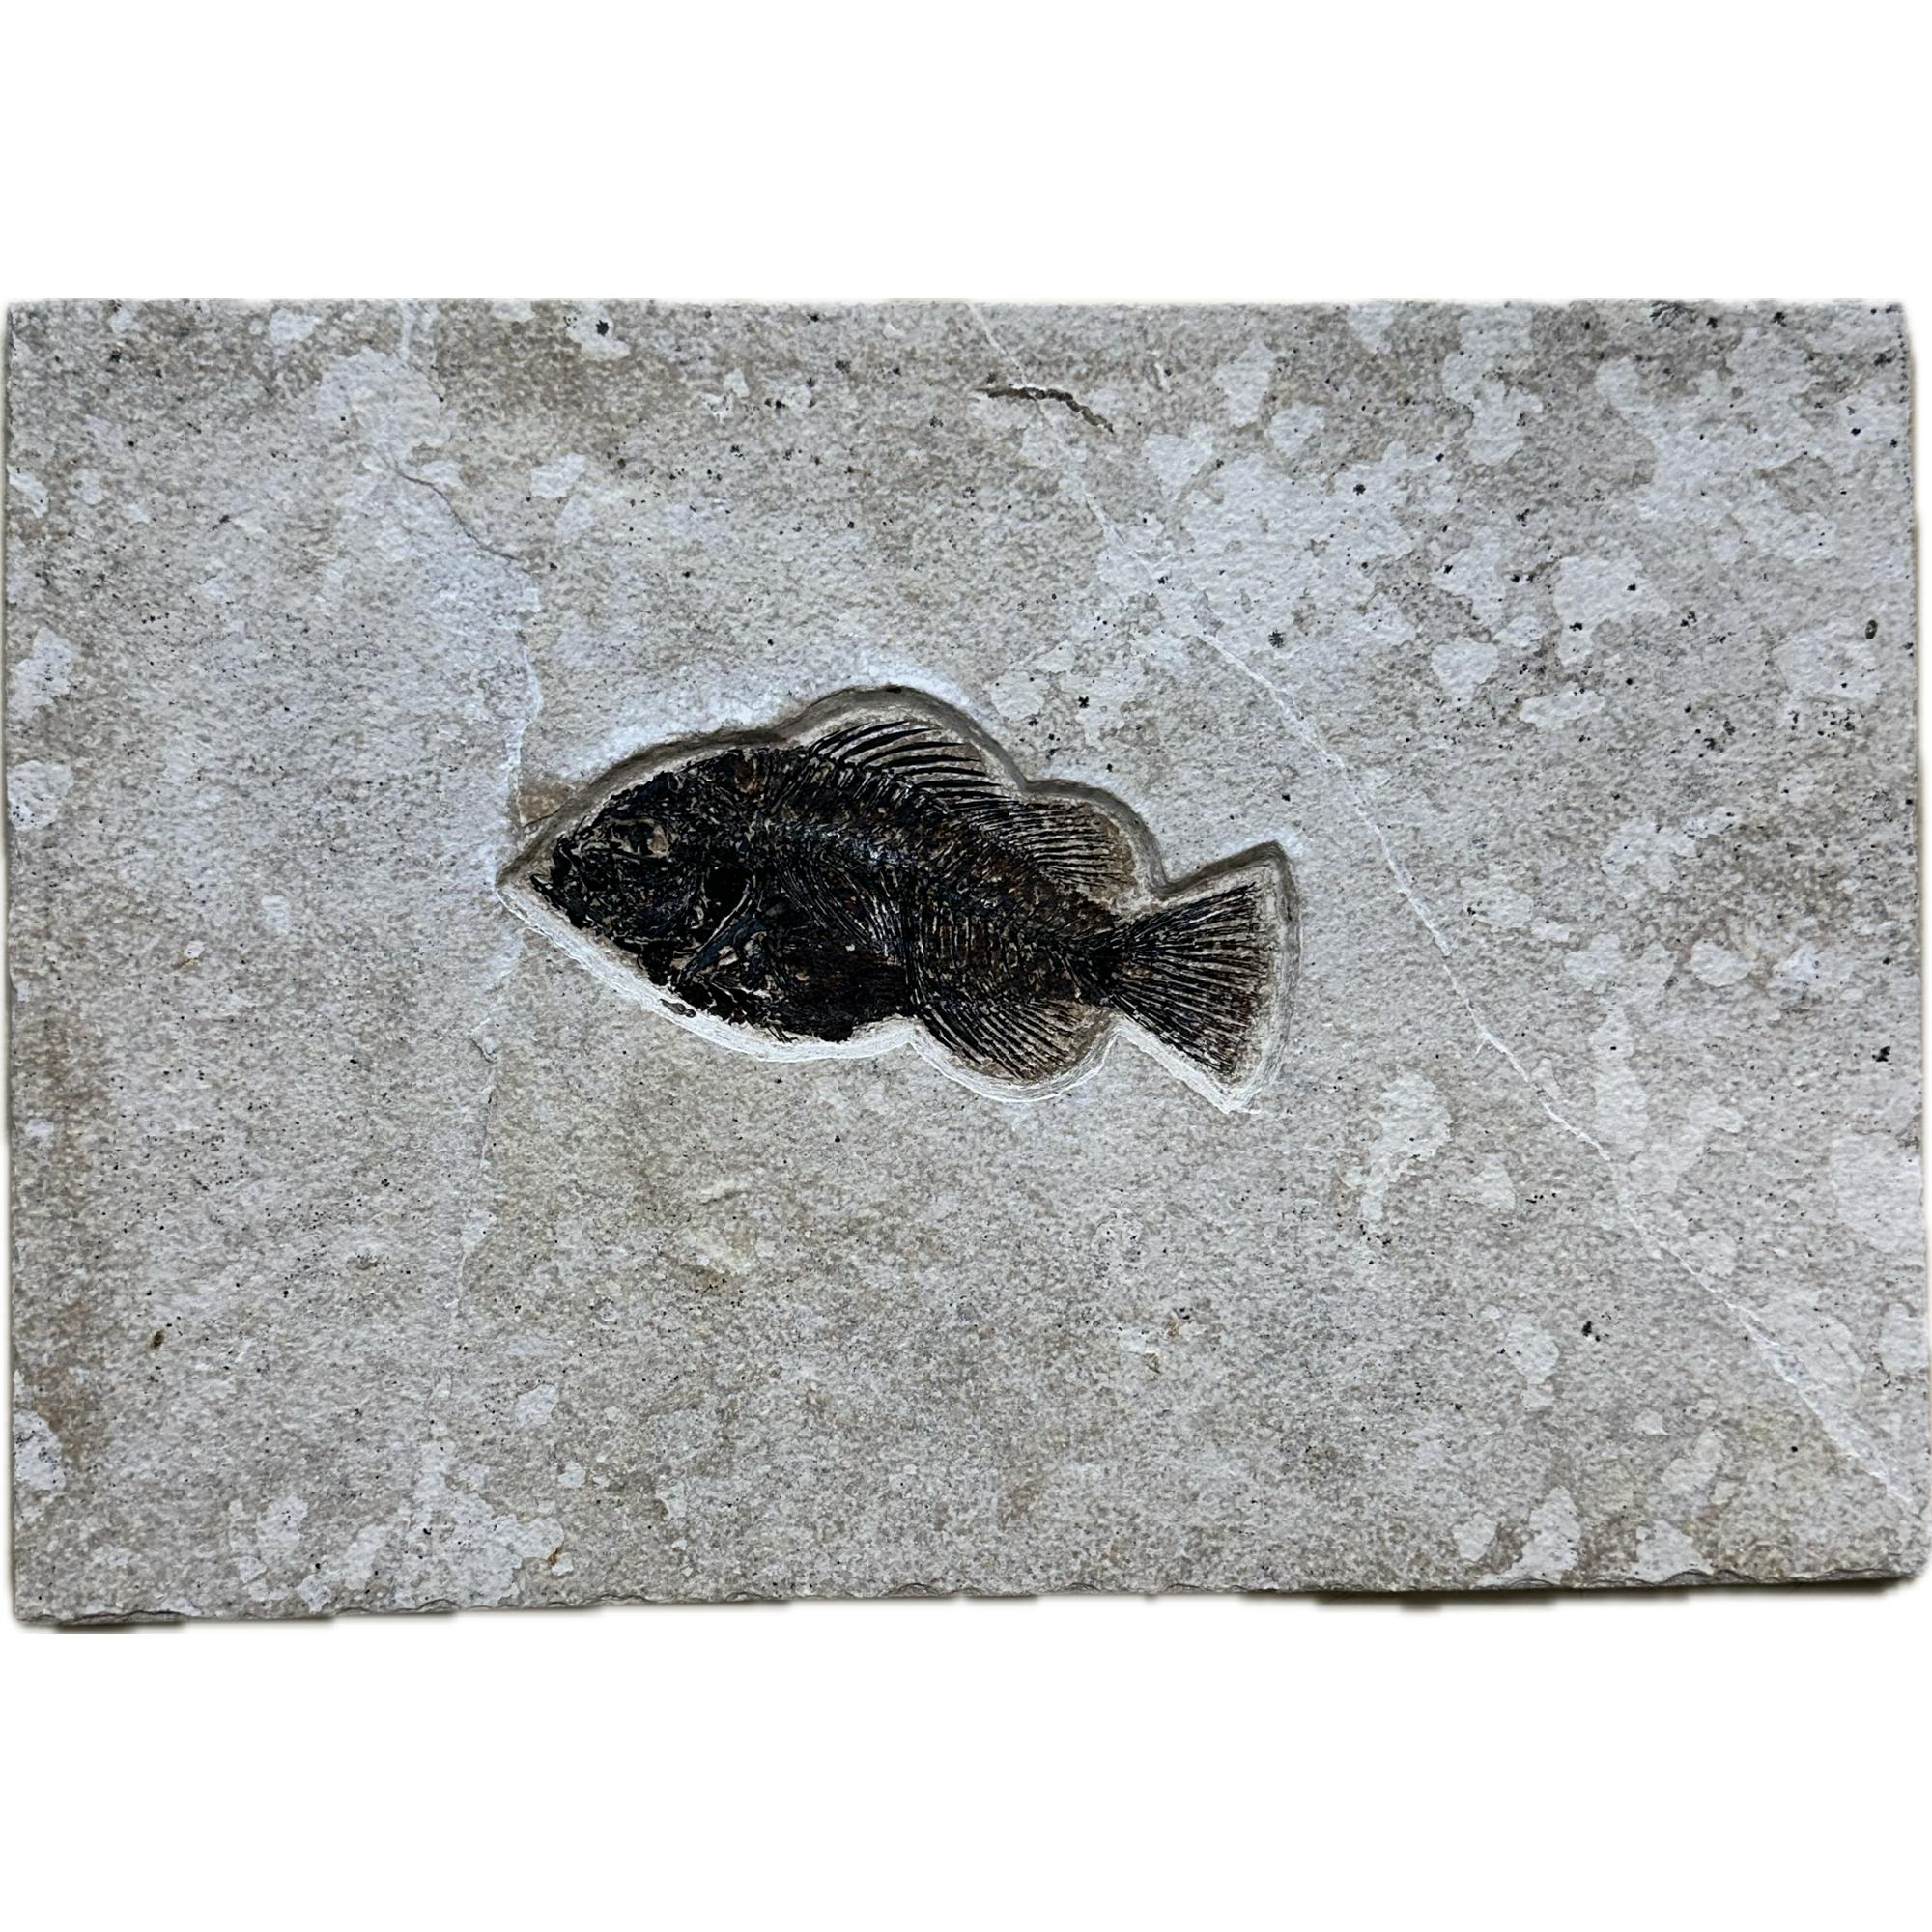 Priscacara fish fossil, Wyoming Prehistoric Online